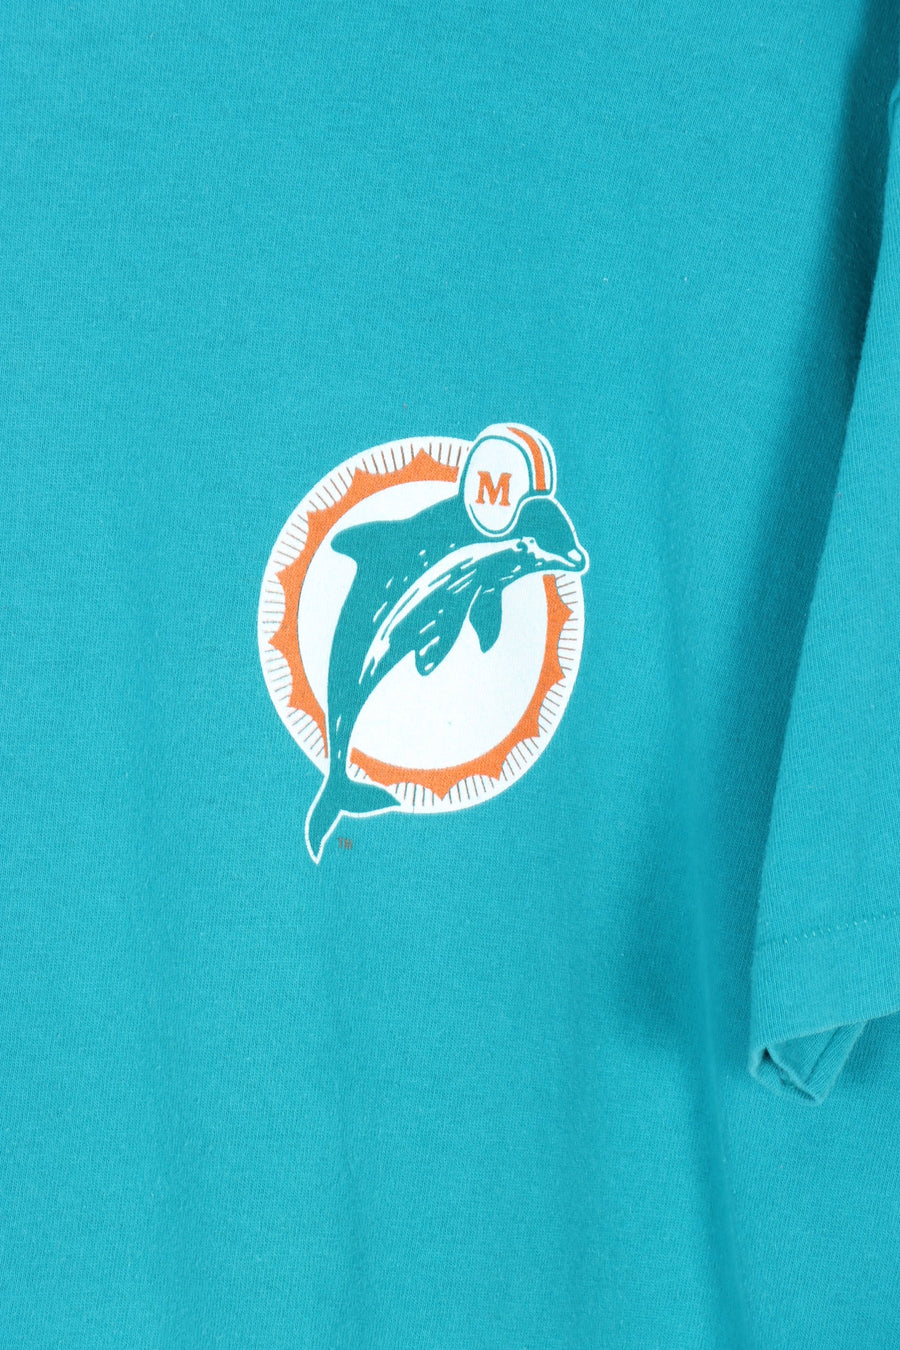 Miami Dolphins SALEM Teal Dolphin NFL Football Tee (L)